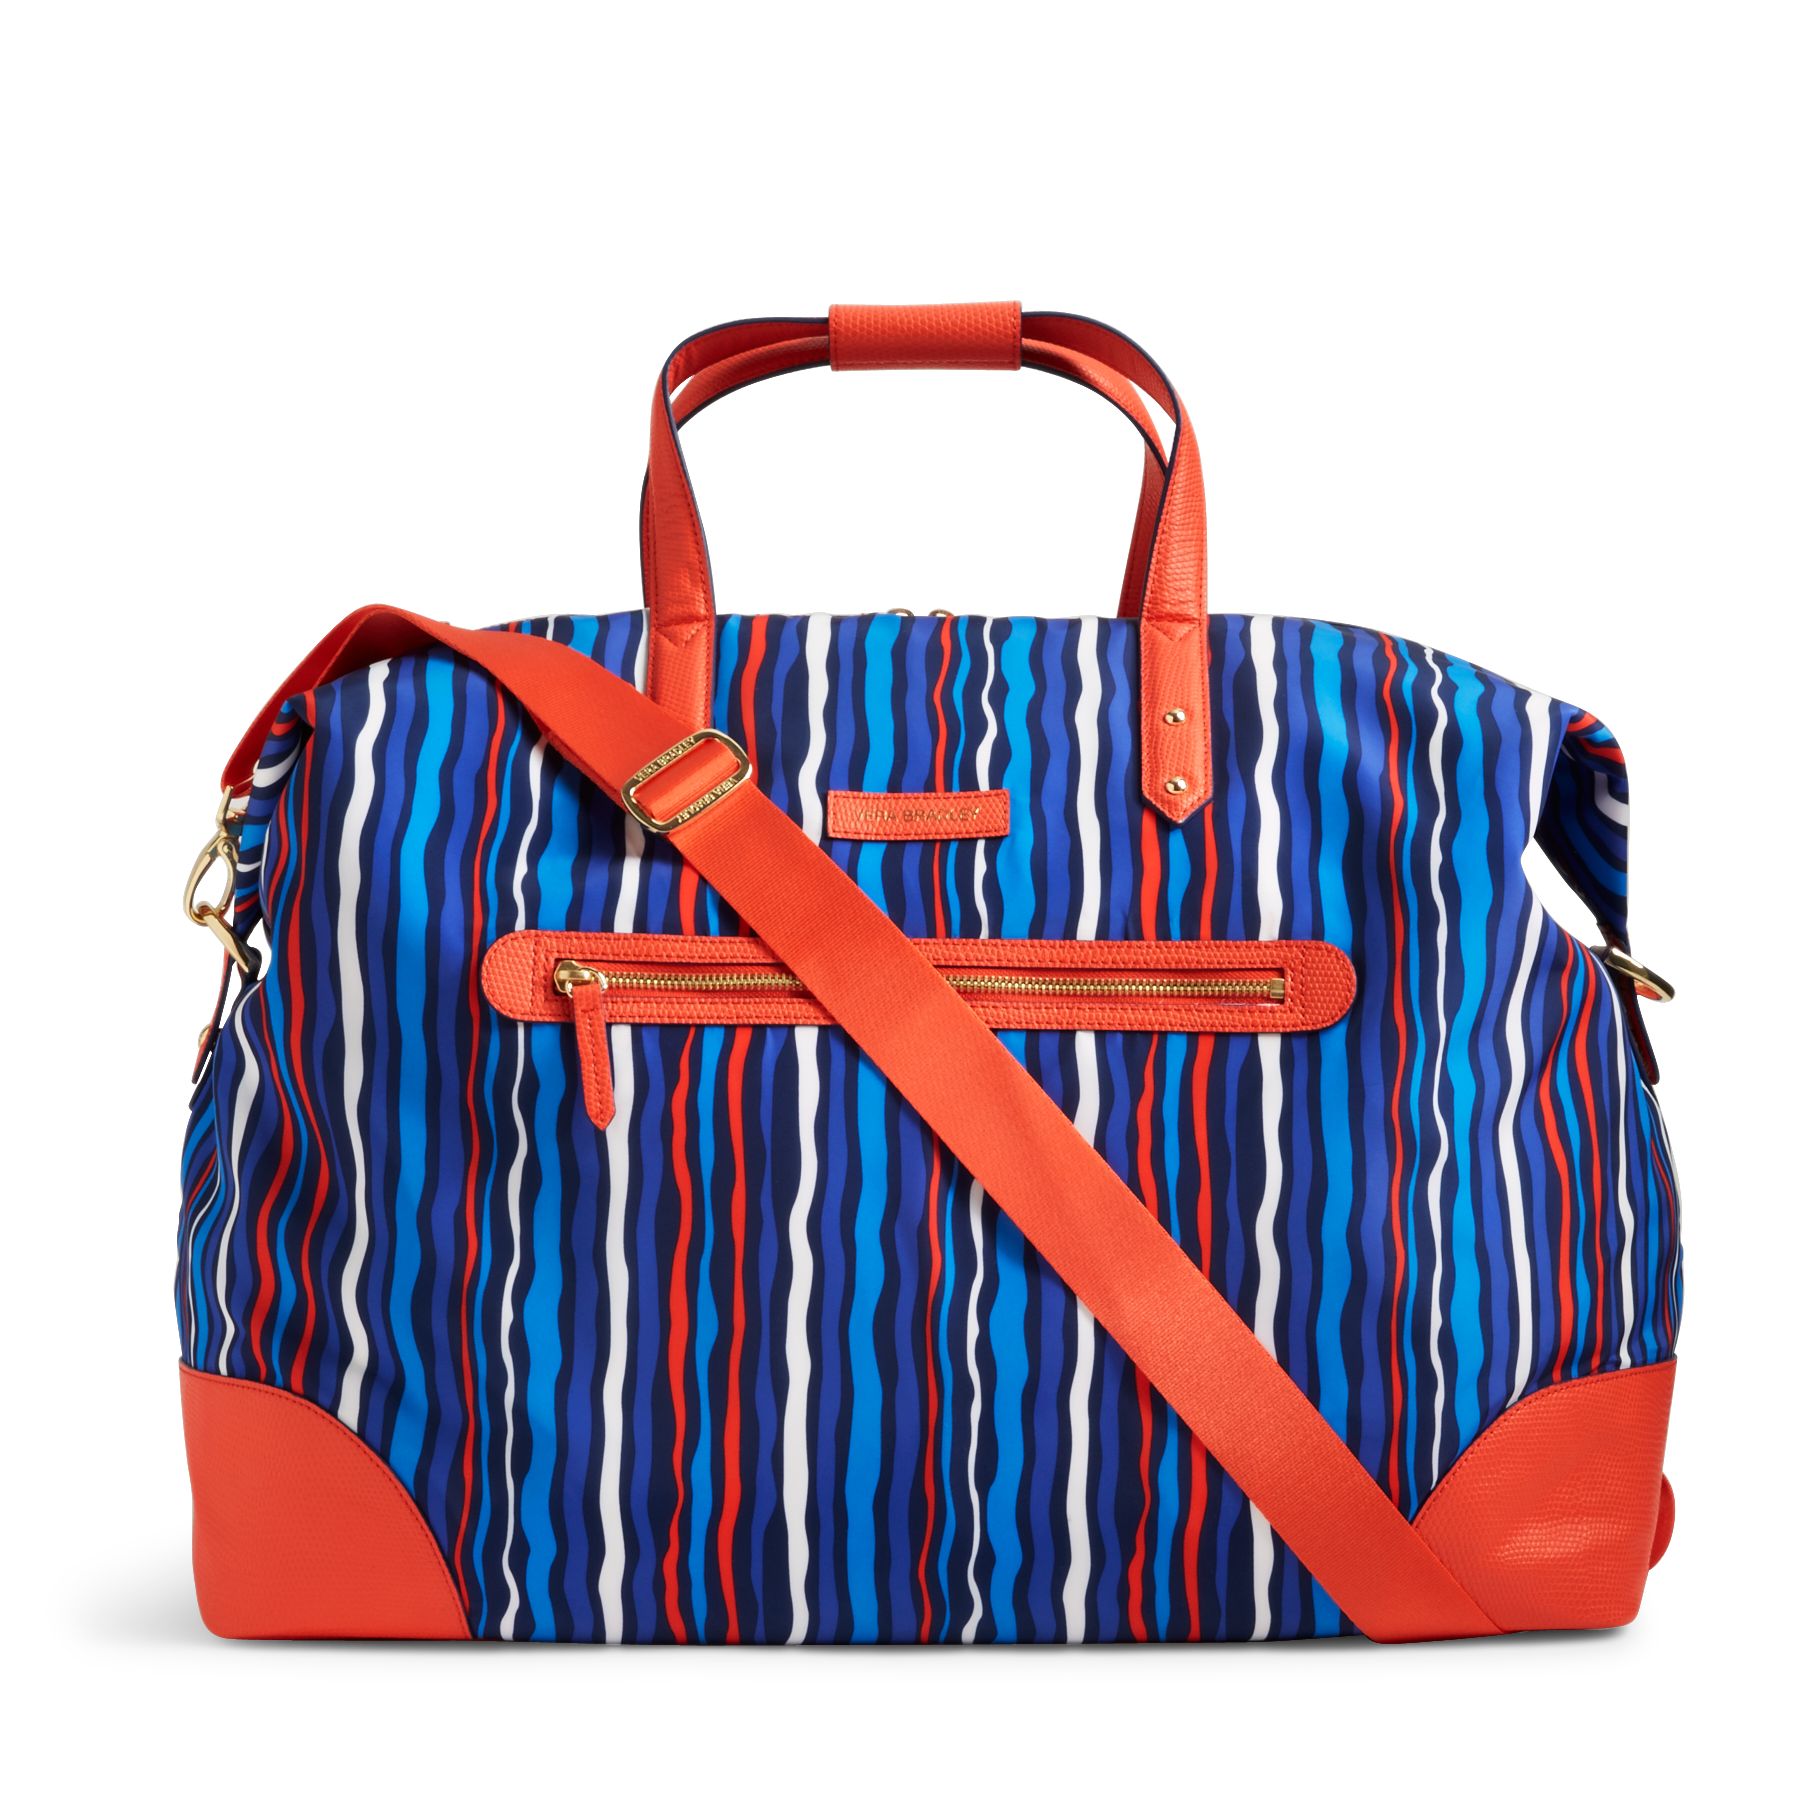 Vera Bradley Preppy Poly Travel Duffel Bag | eBay